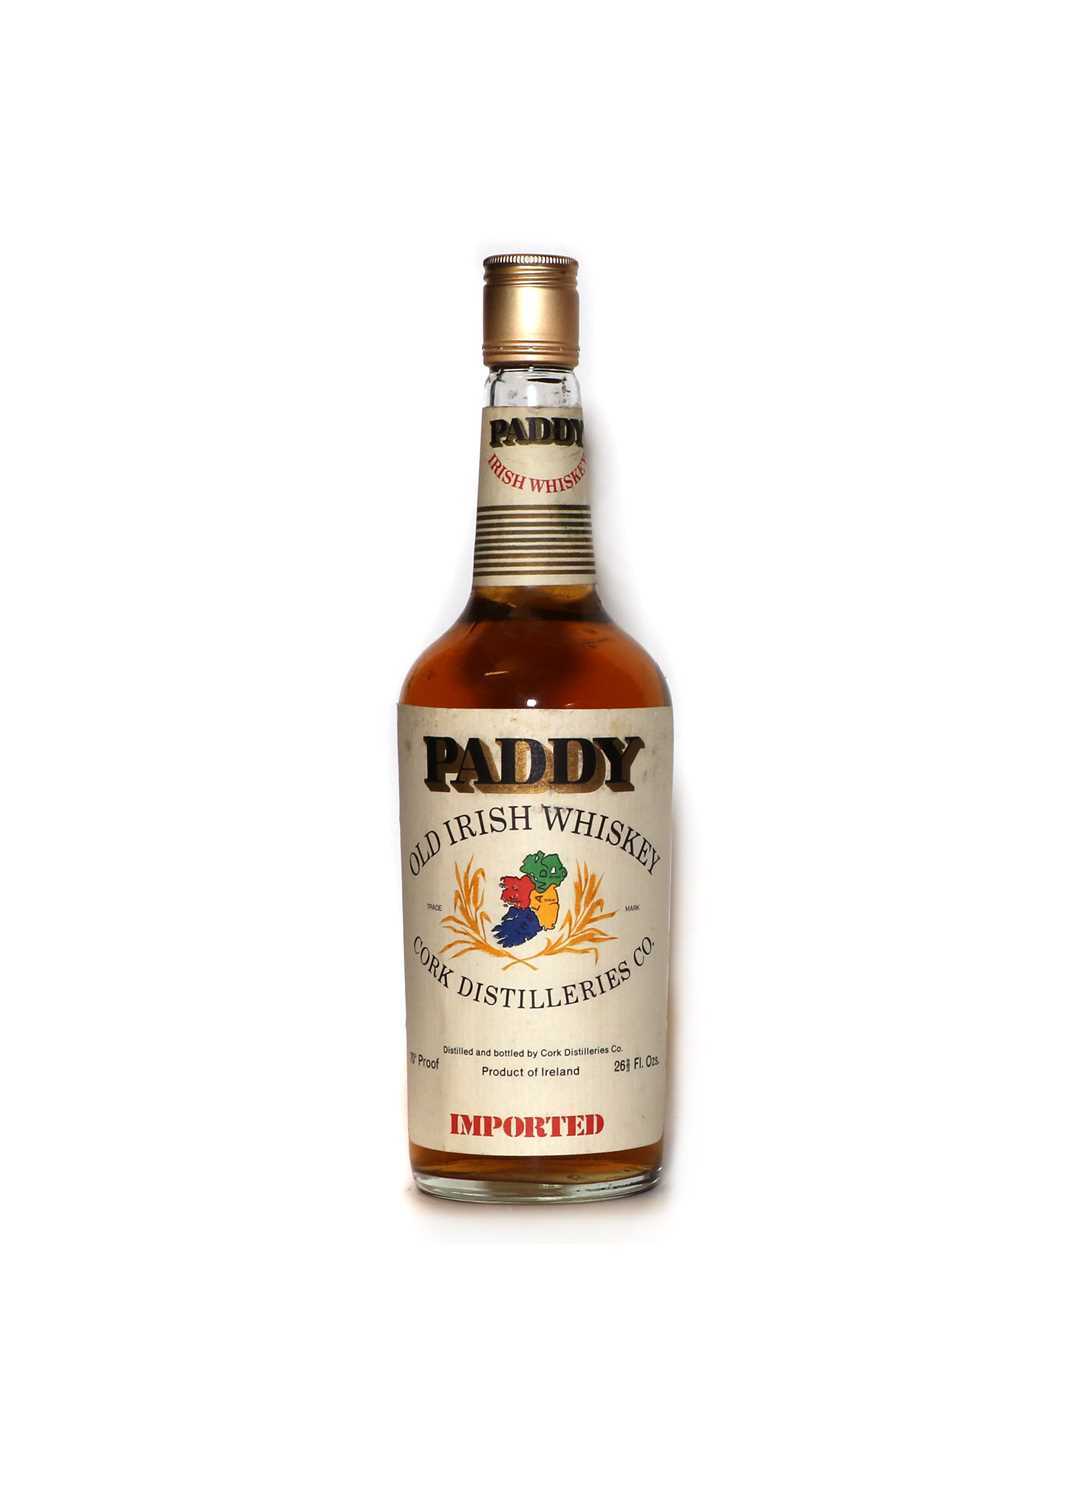 Paddy, Old Irish Whiskey, 1970s import bottling, 70 proof, 26 2/3fl. ozs, (1)